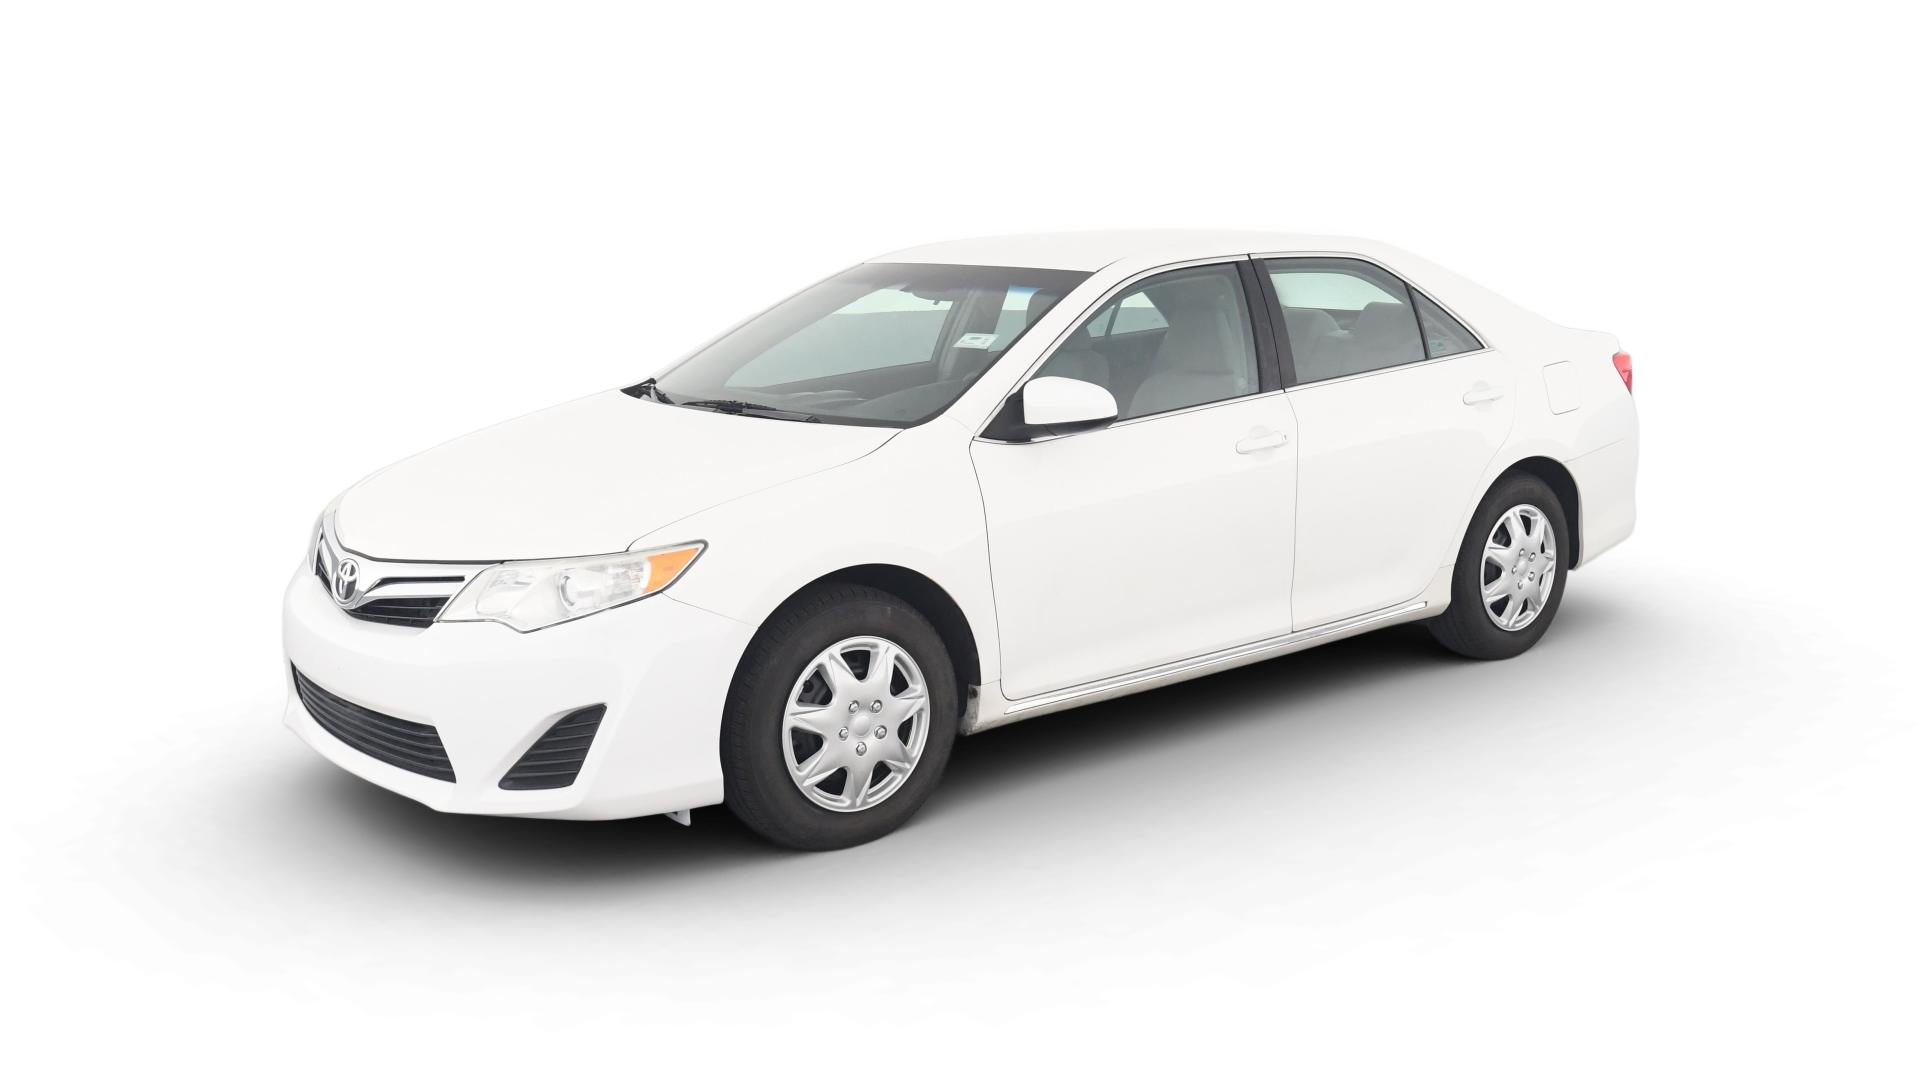 Toyota Camry model image.